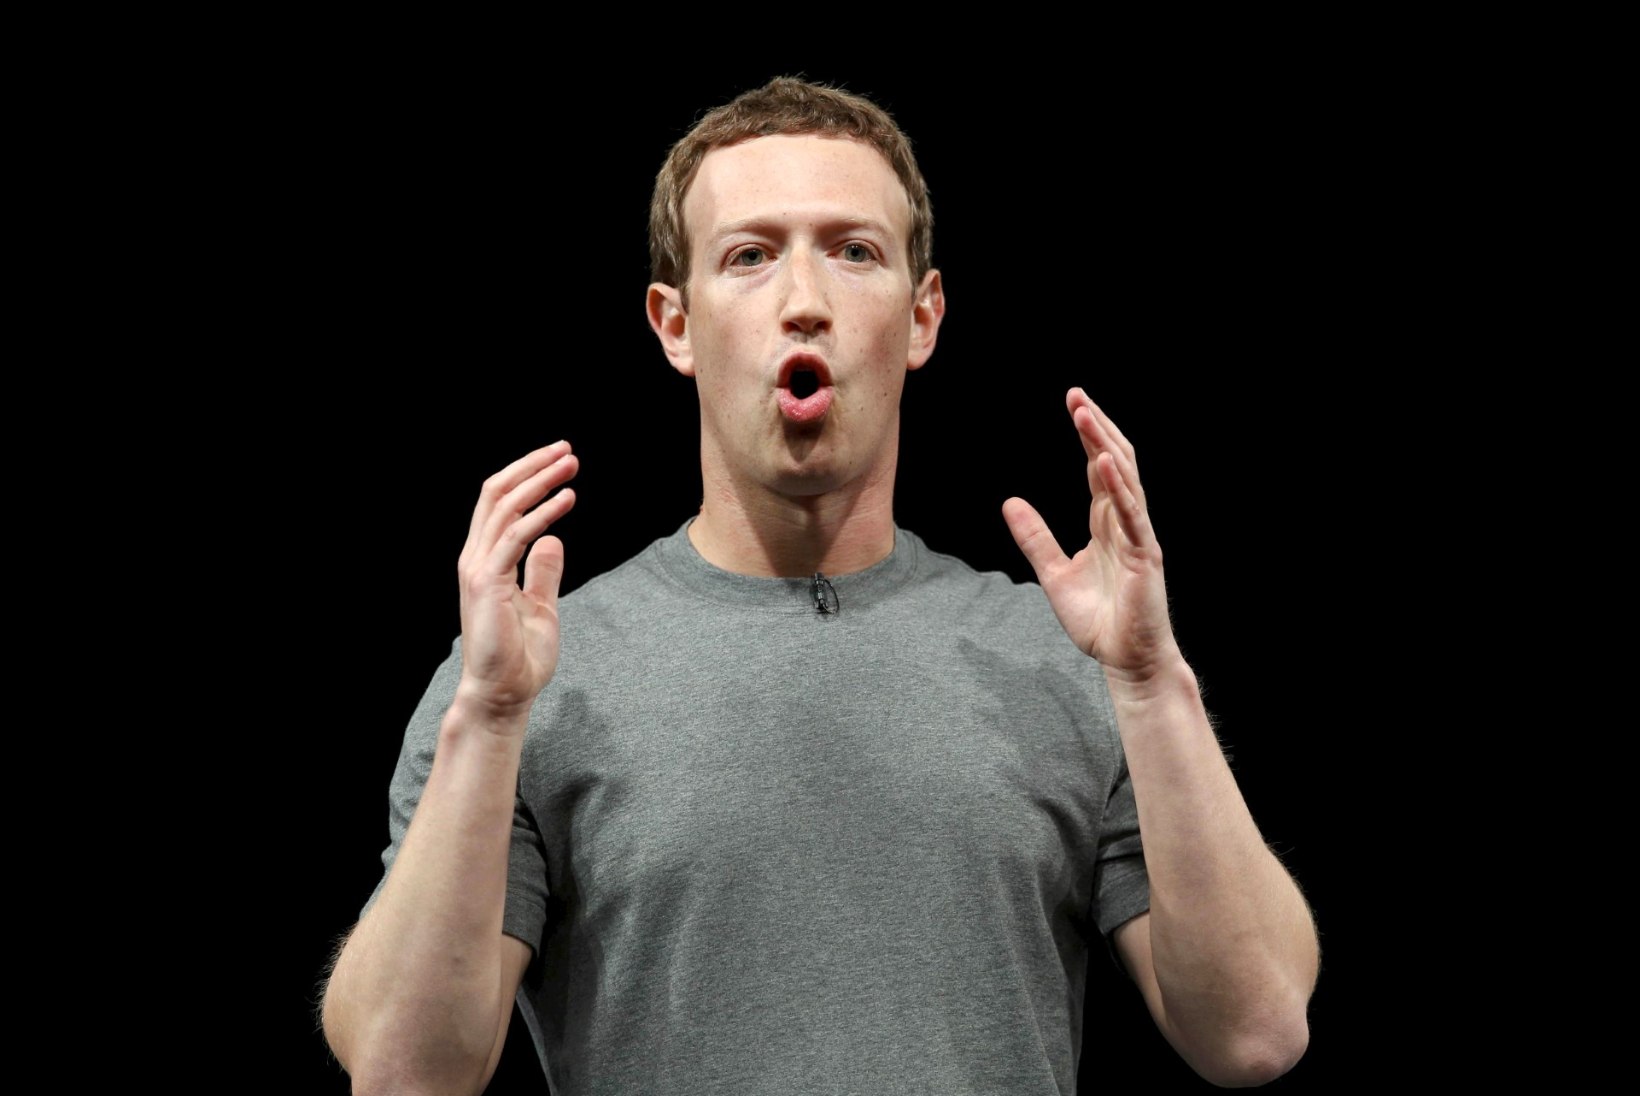 Mark Zuckerbergi varandus kasvas päevas 30 miljonit